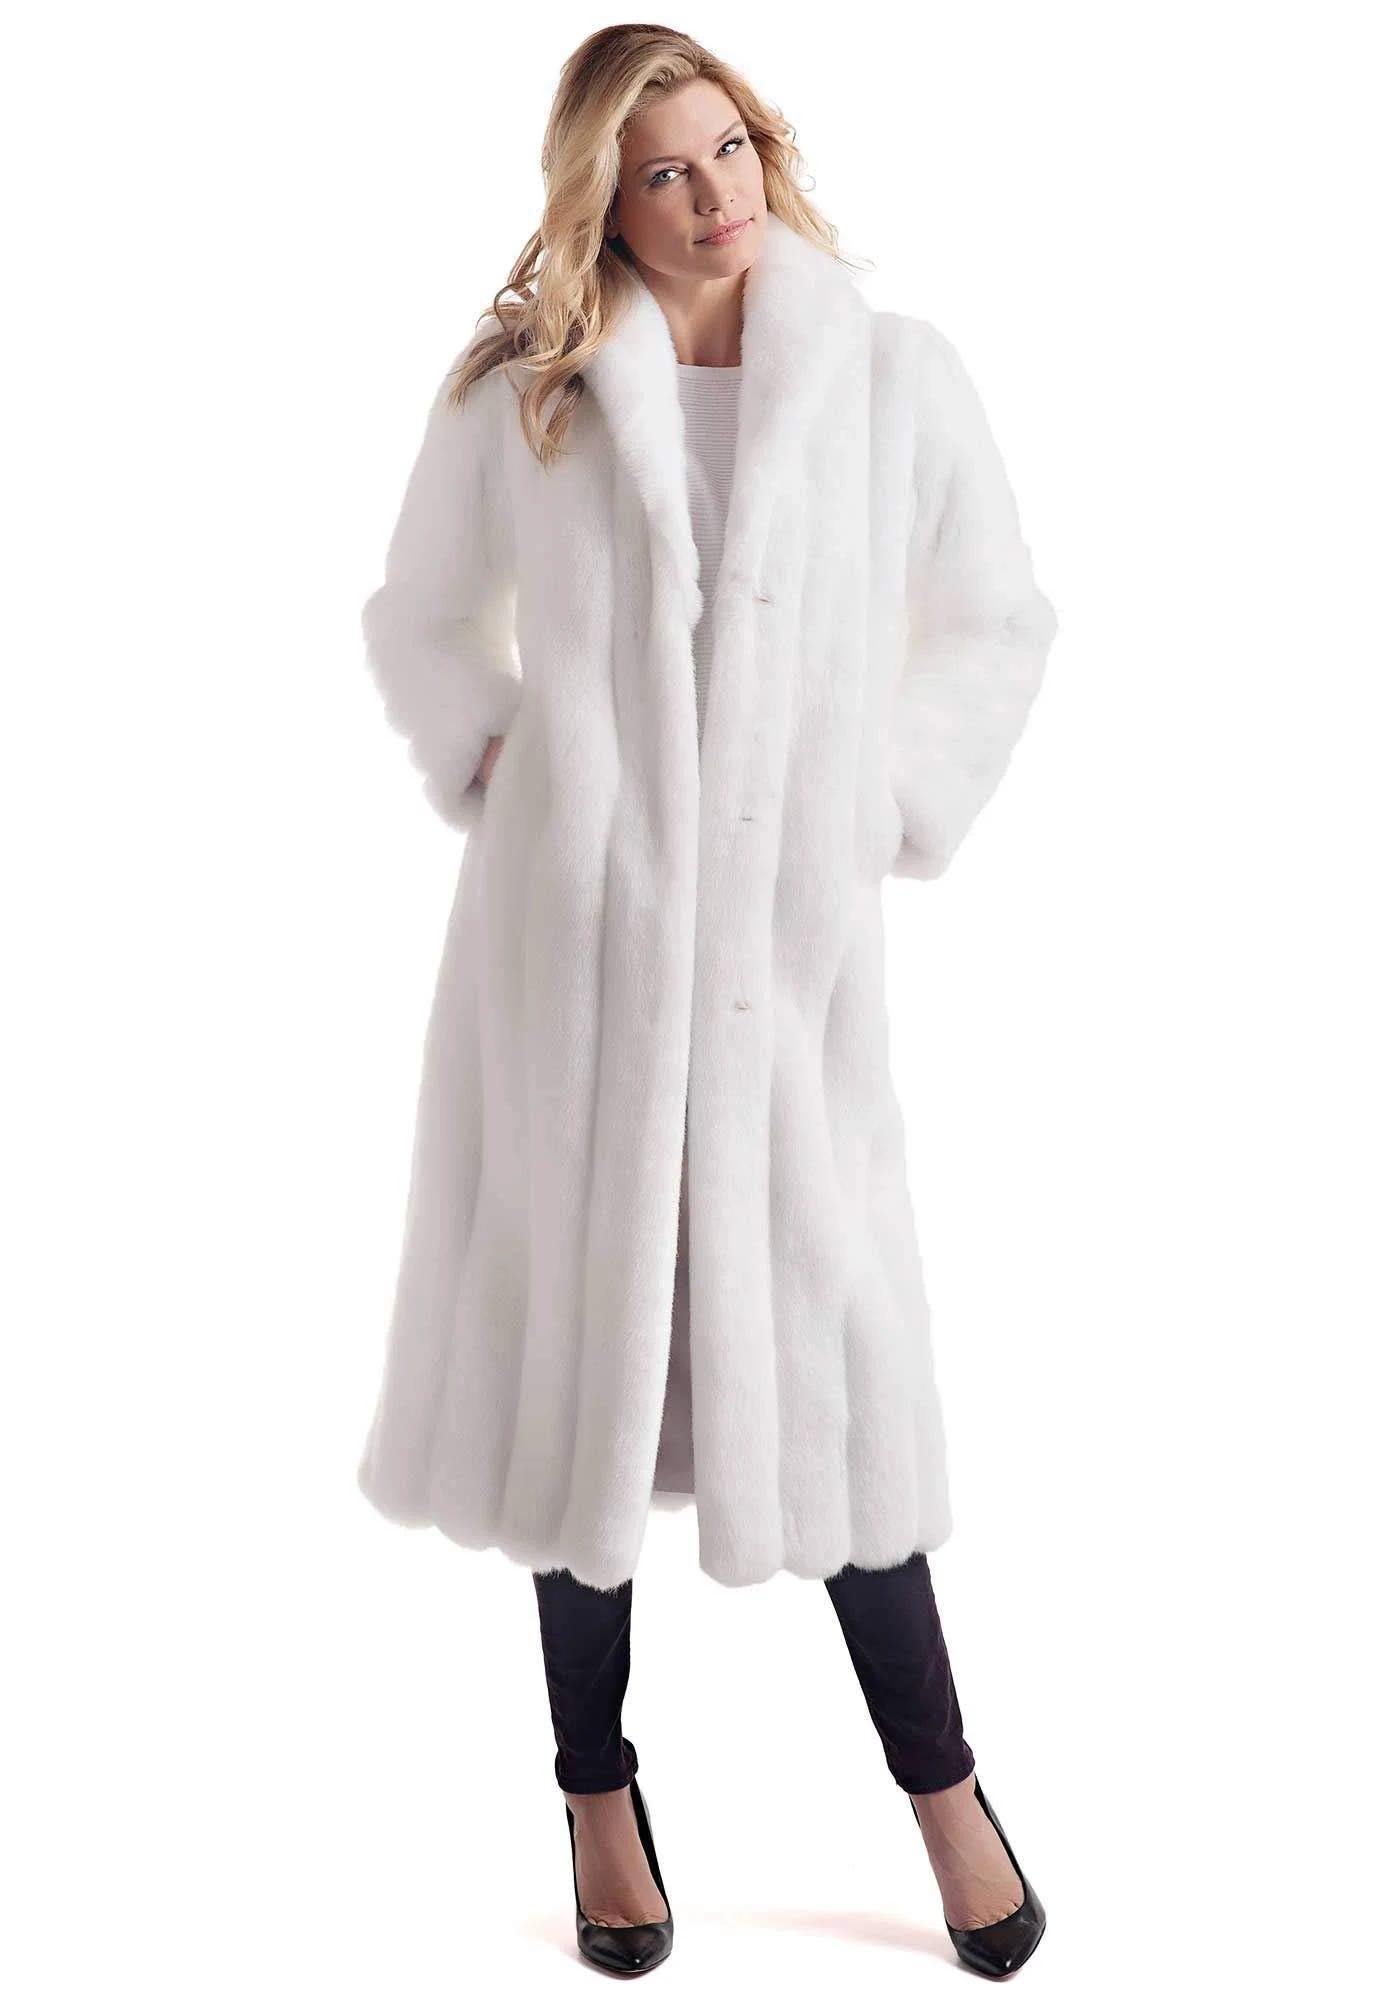 Stylish White Mink Faux Fur Coat with Shawl Collar and Acrylic Lining | Image